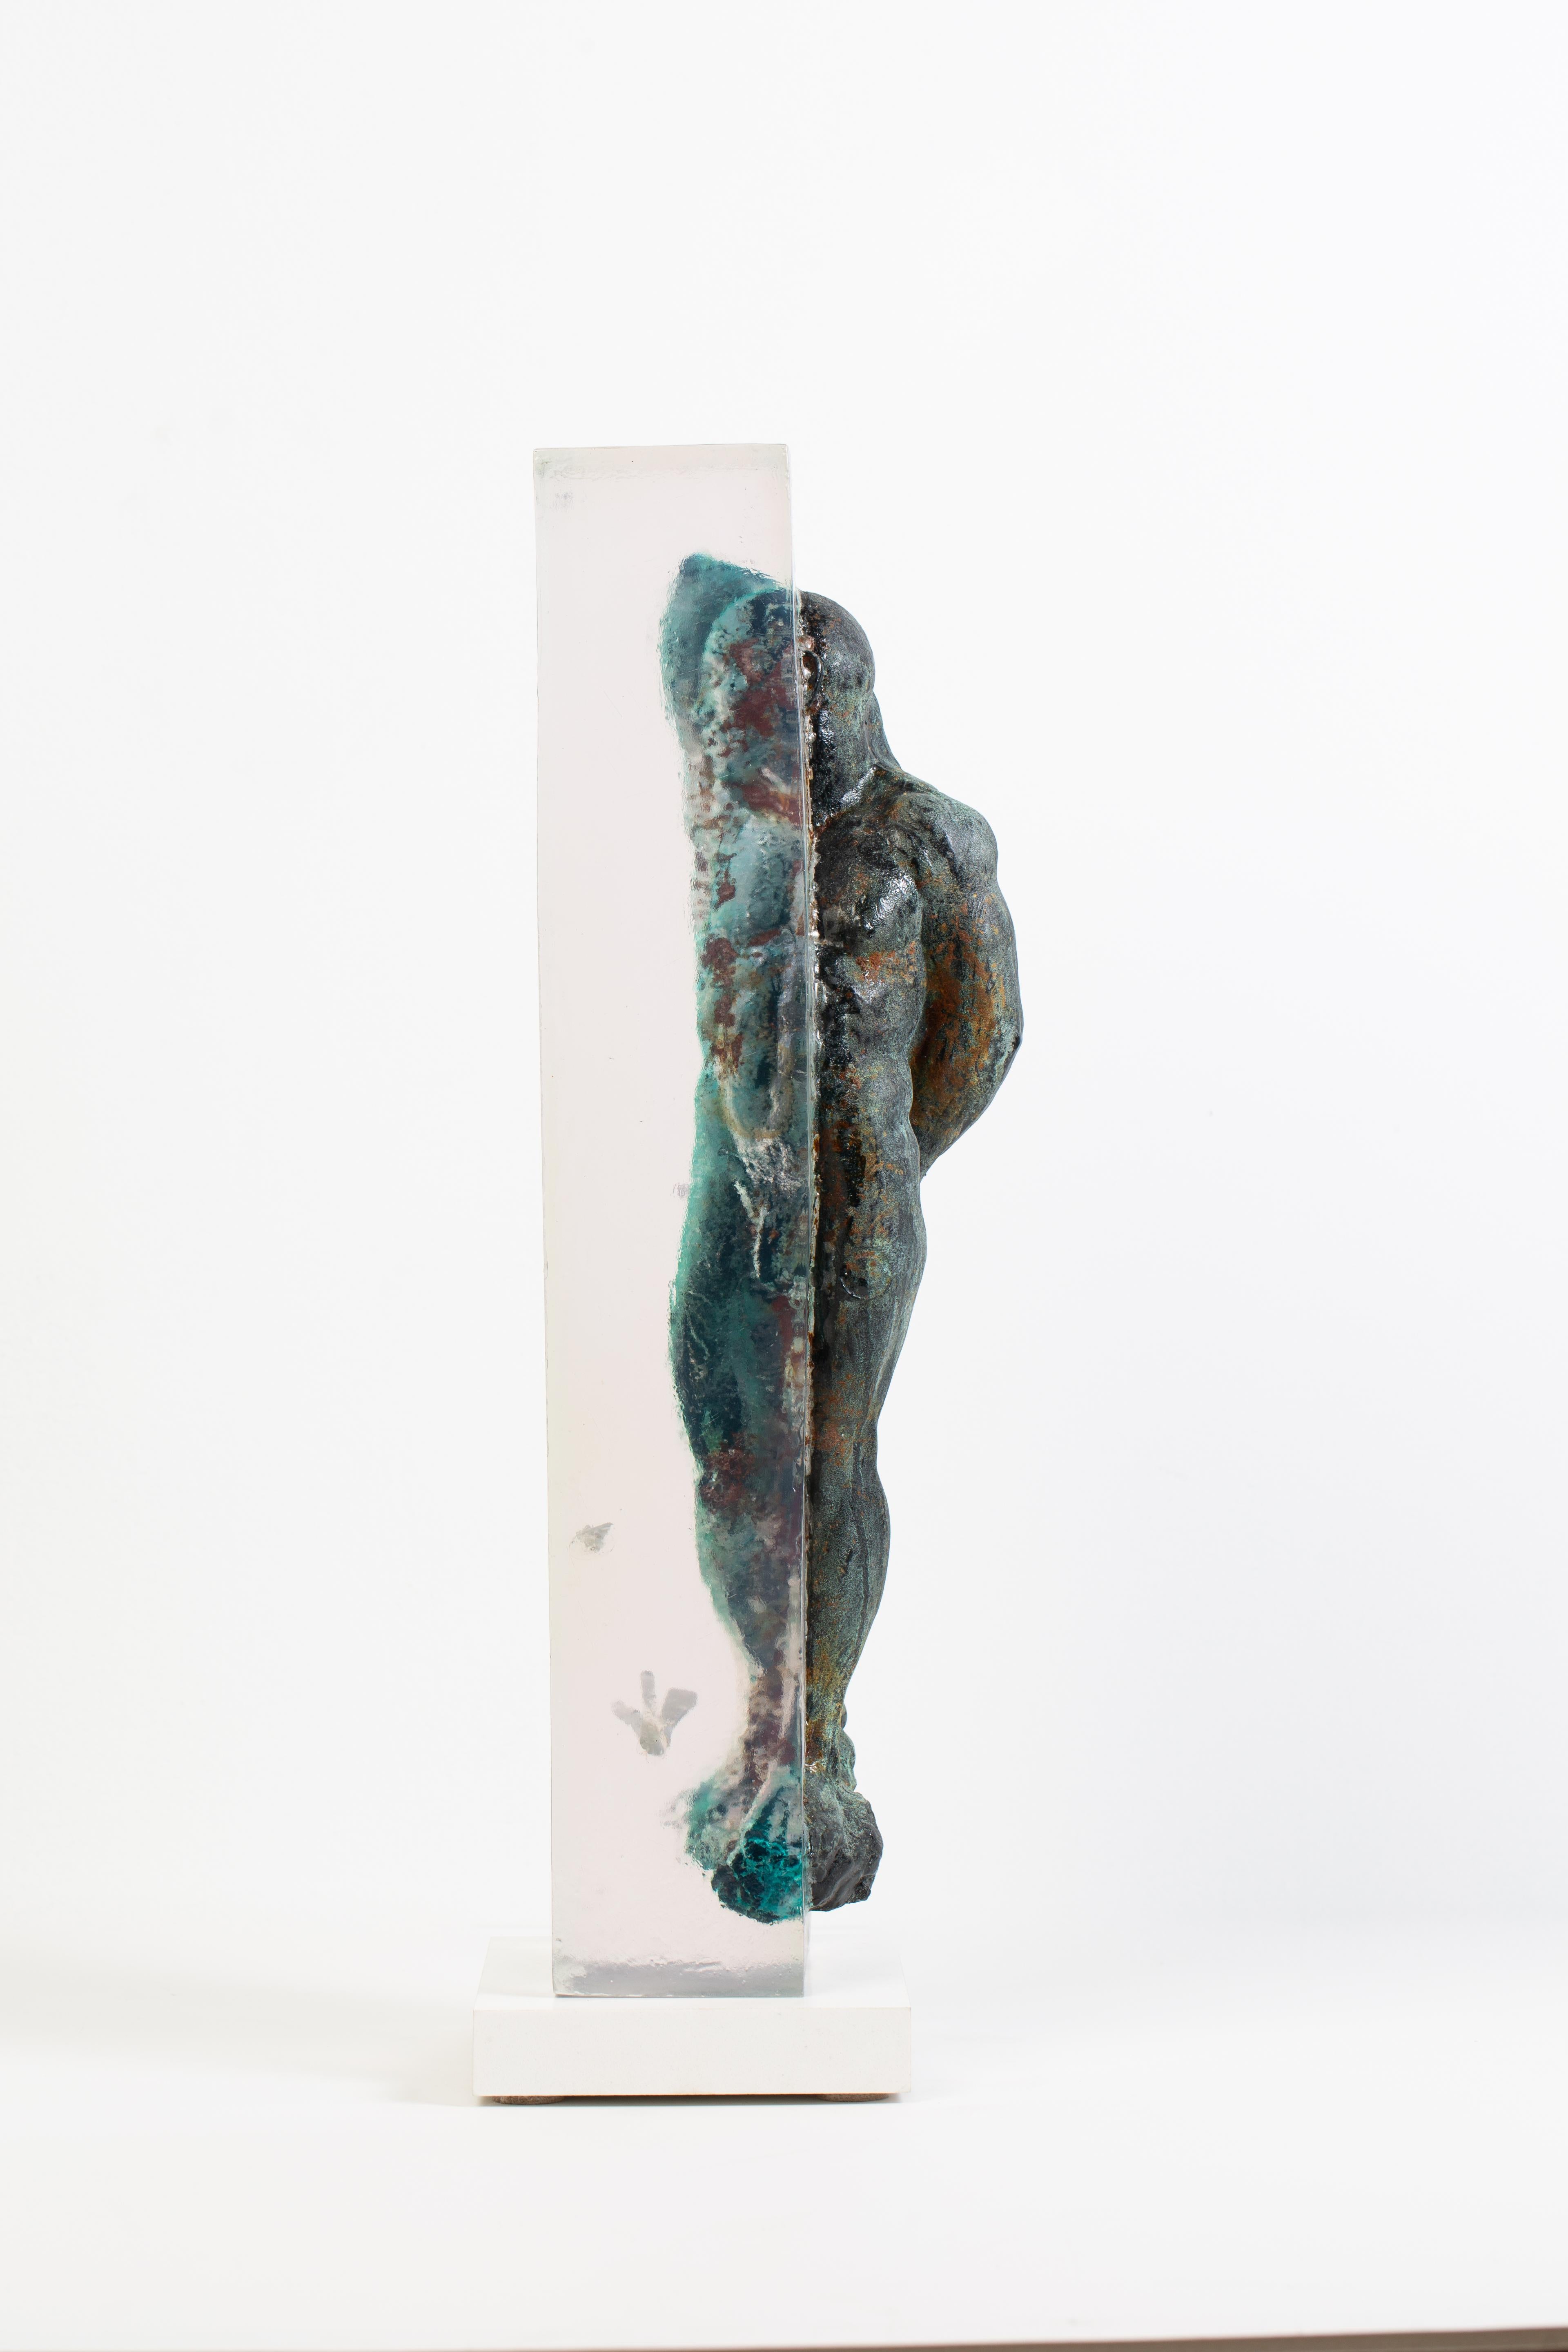 Embedded Slave - After Michelangelo, Sculpture Half Embedded in Clear Resin 12